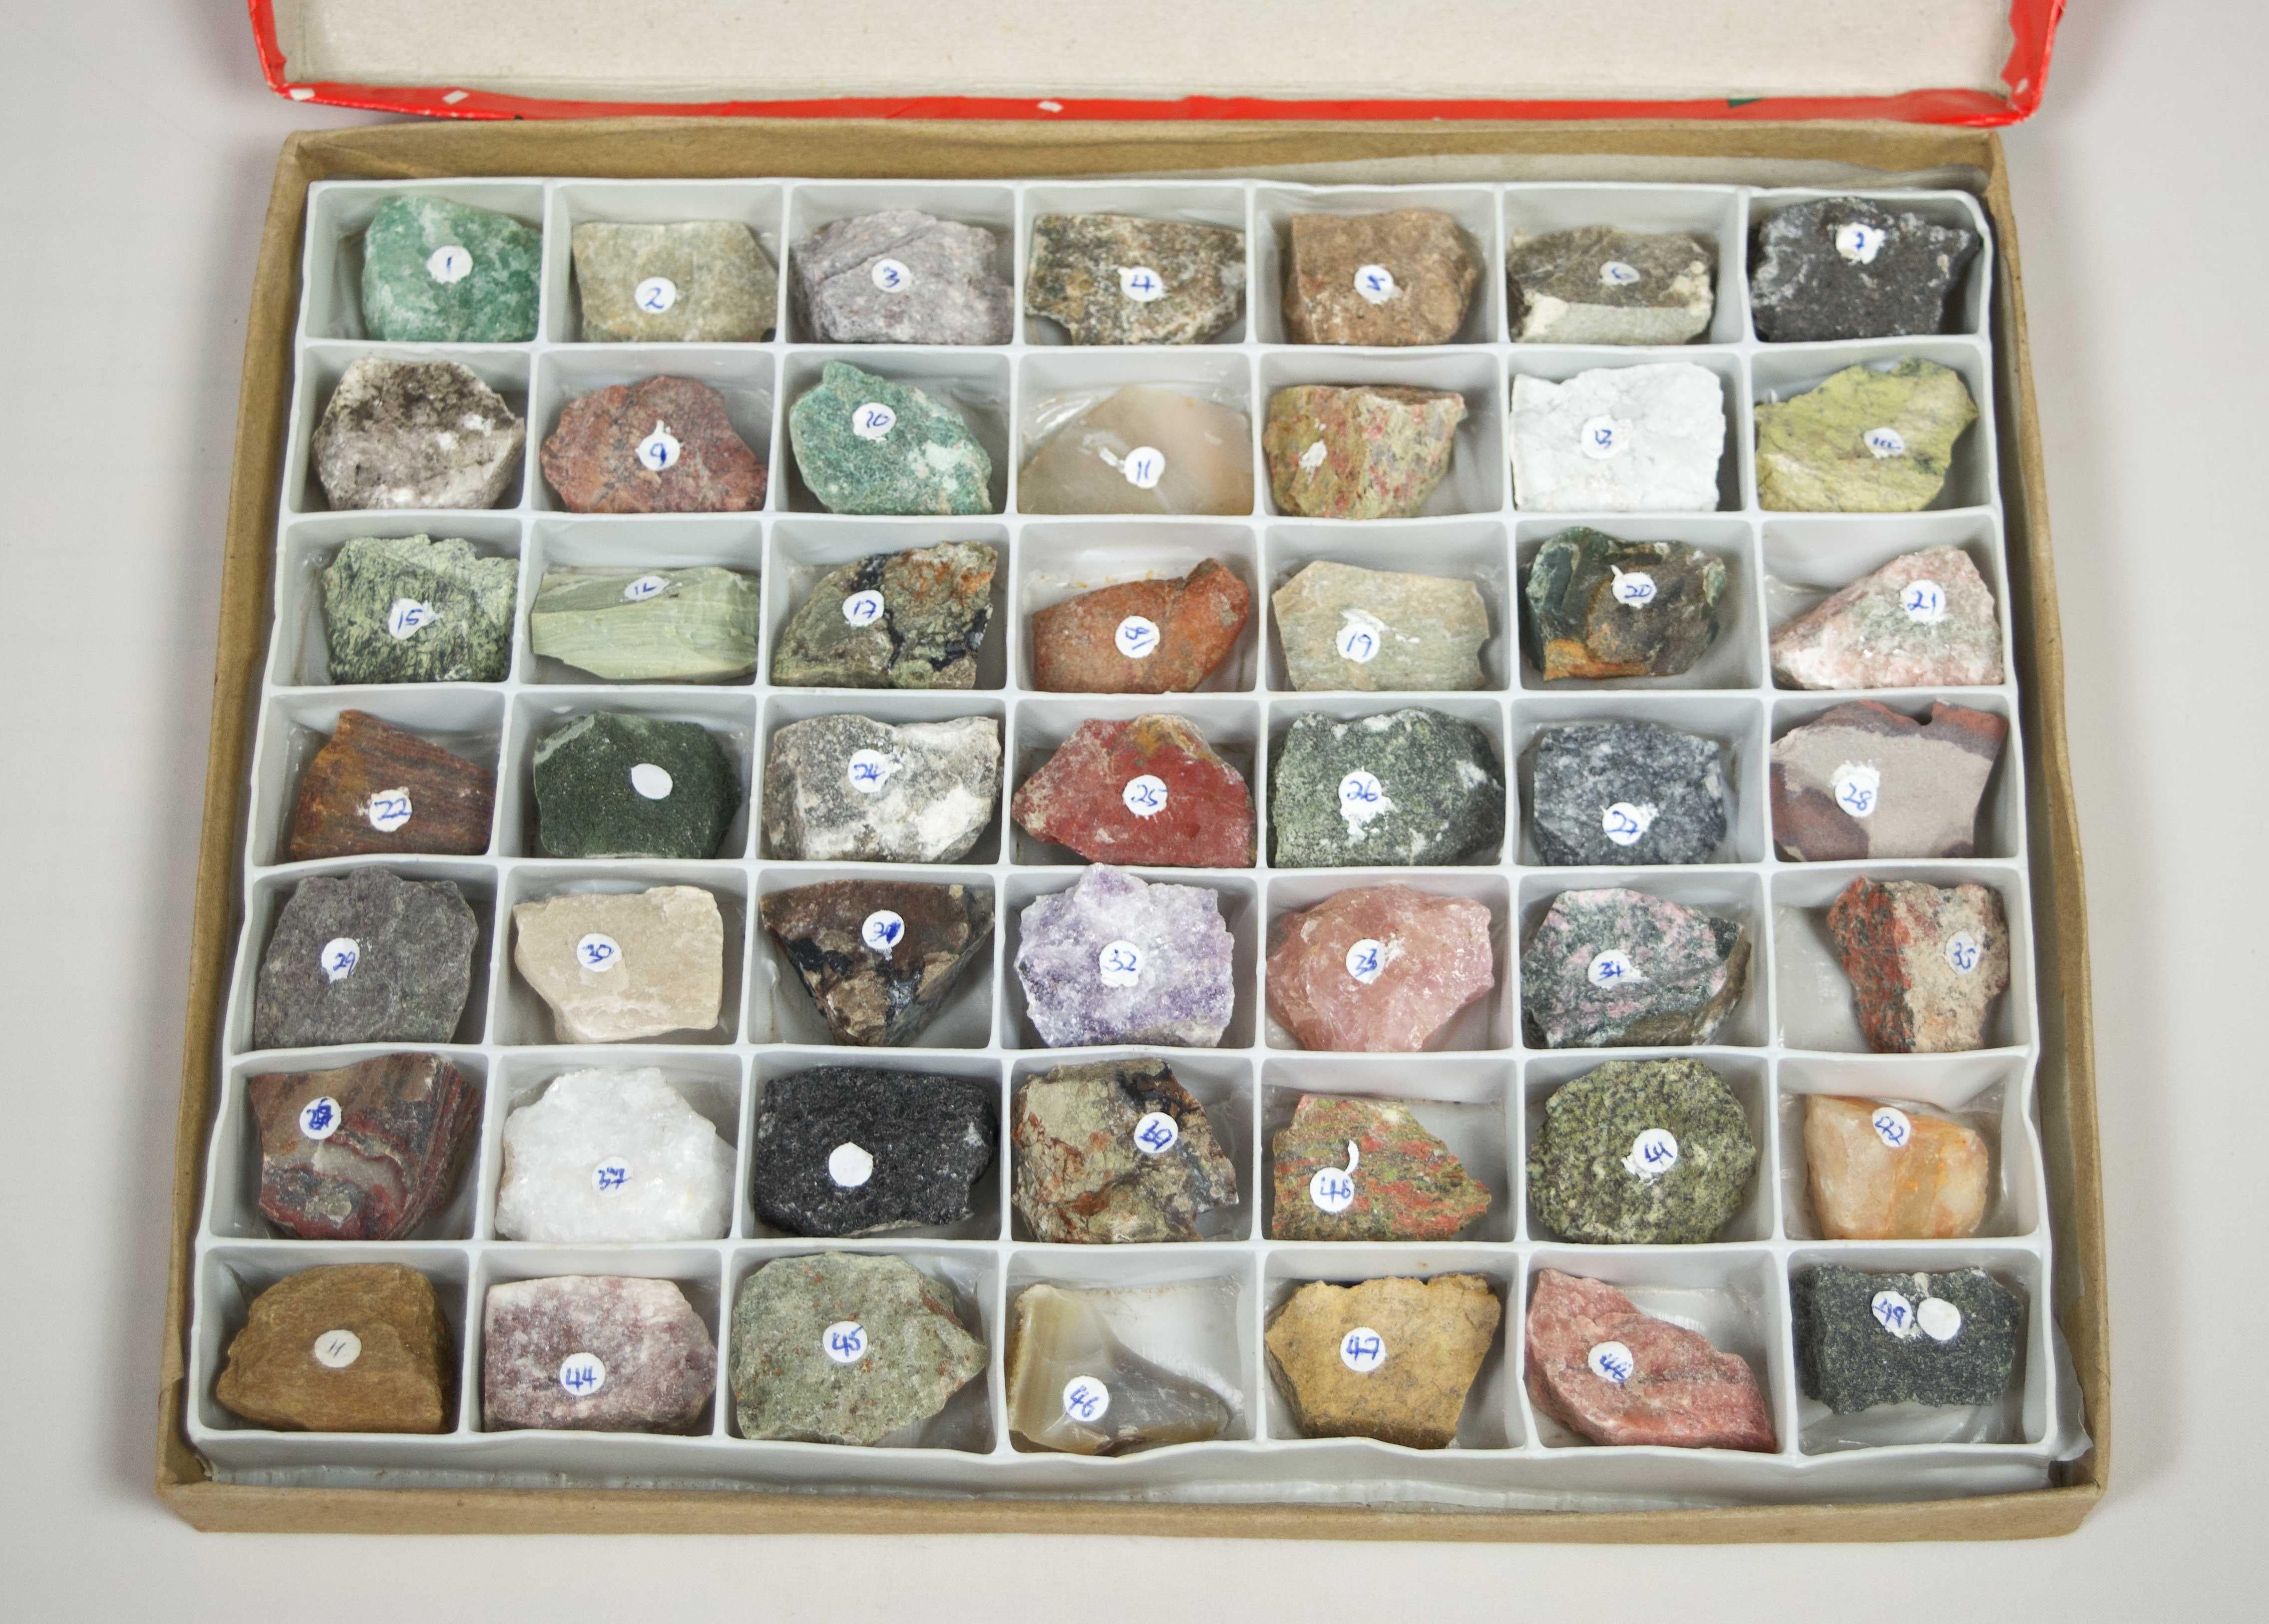 African (Shona)
49 Shona Stone Samples with Specimen Box.